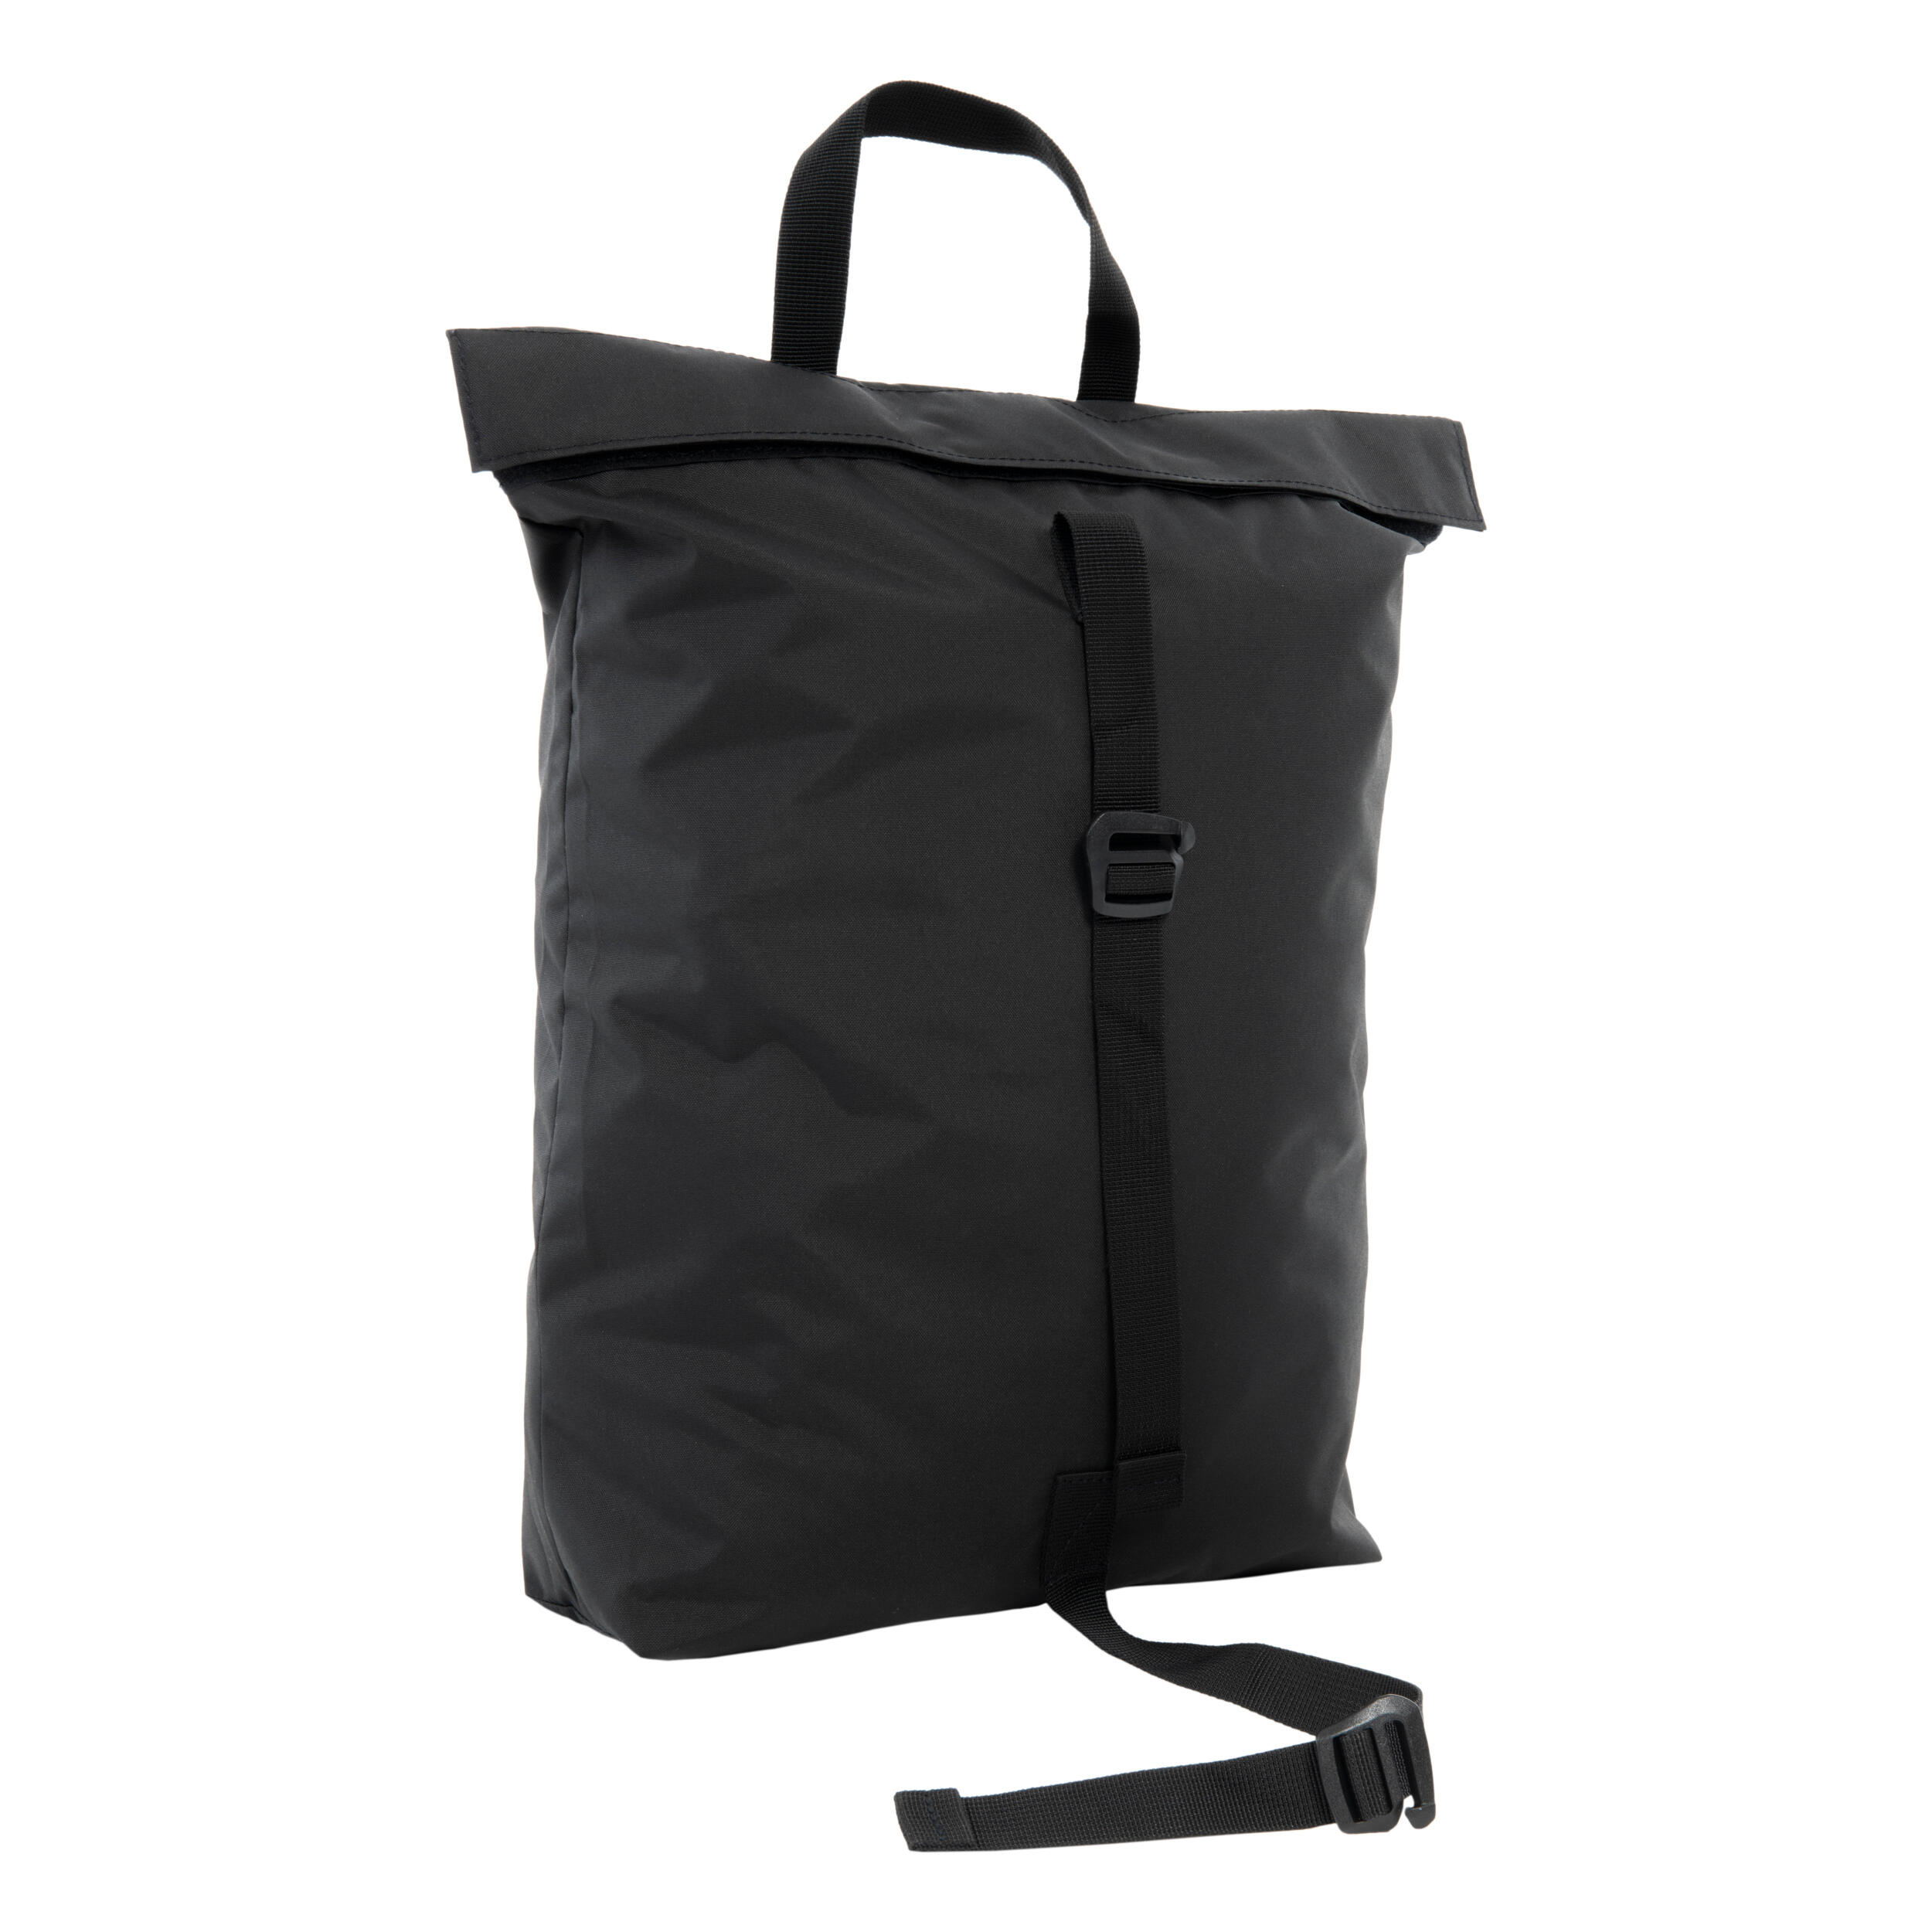 Weighted Basketball Bag - B100 Box Ballast Bag 1/4